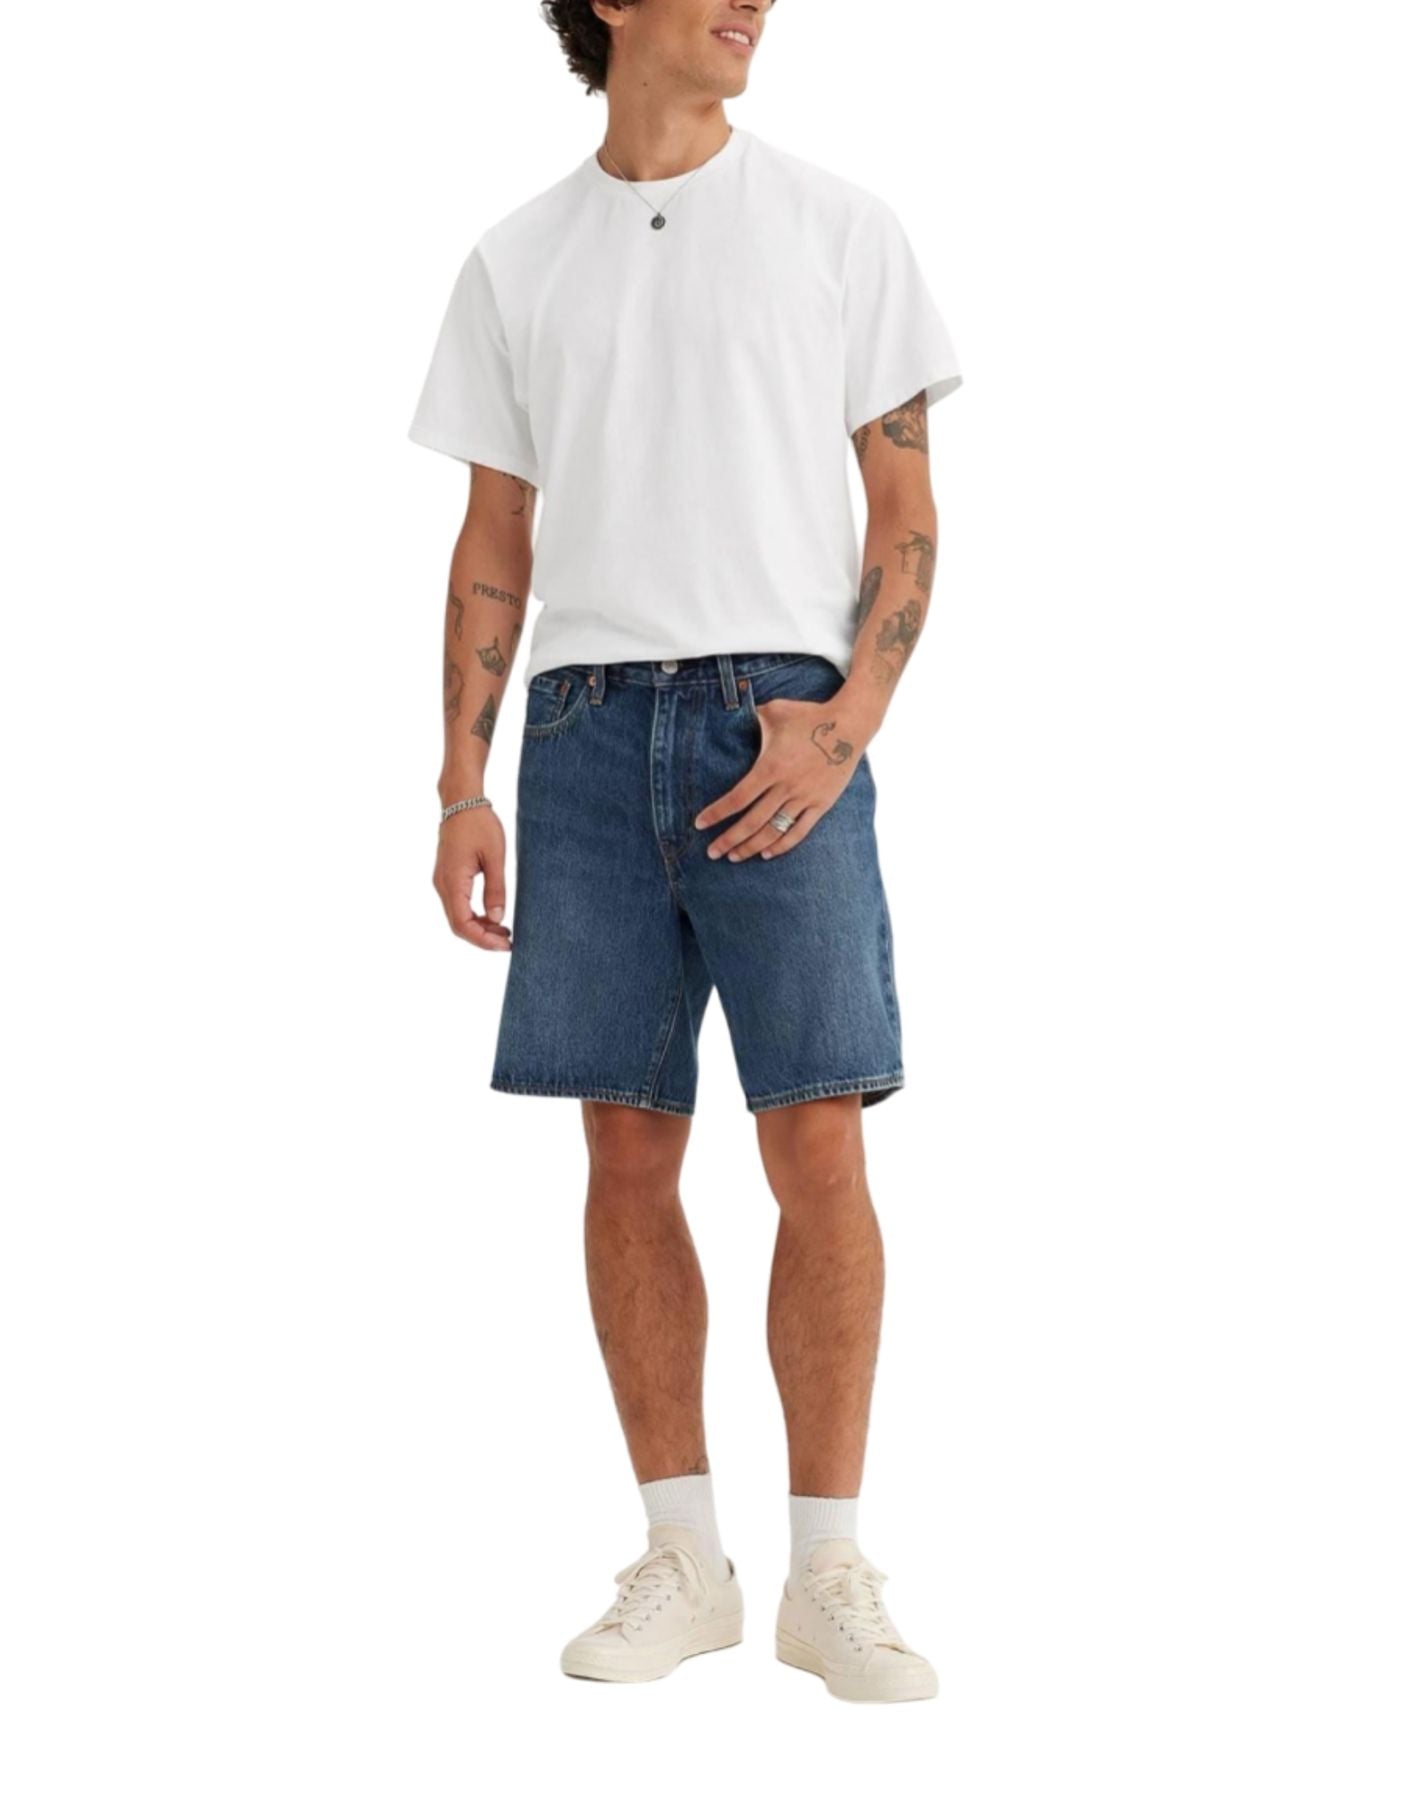 Pantalones cortos para hombre A8461 0003 Levi azul